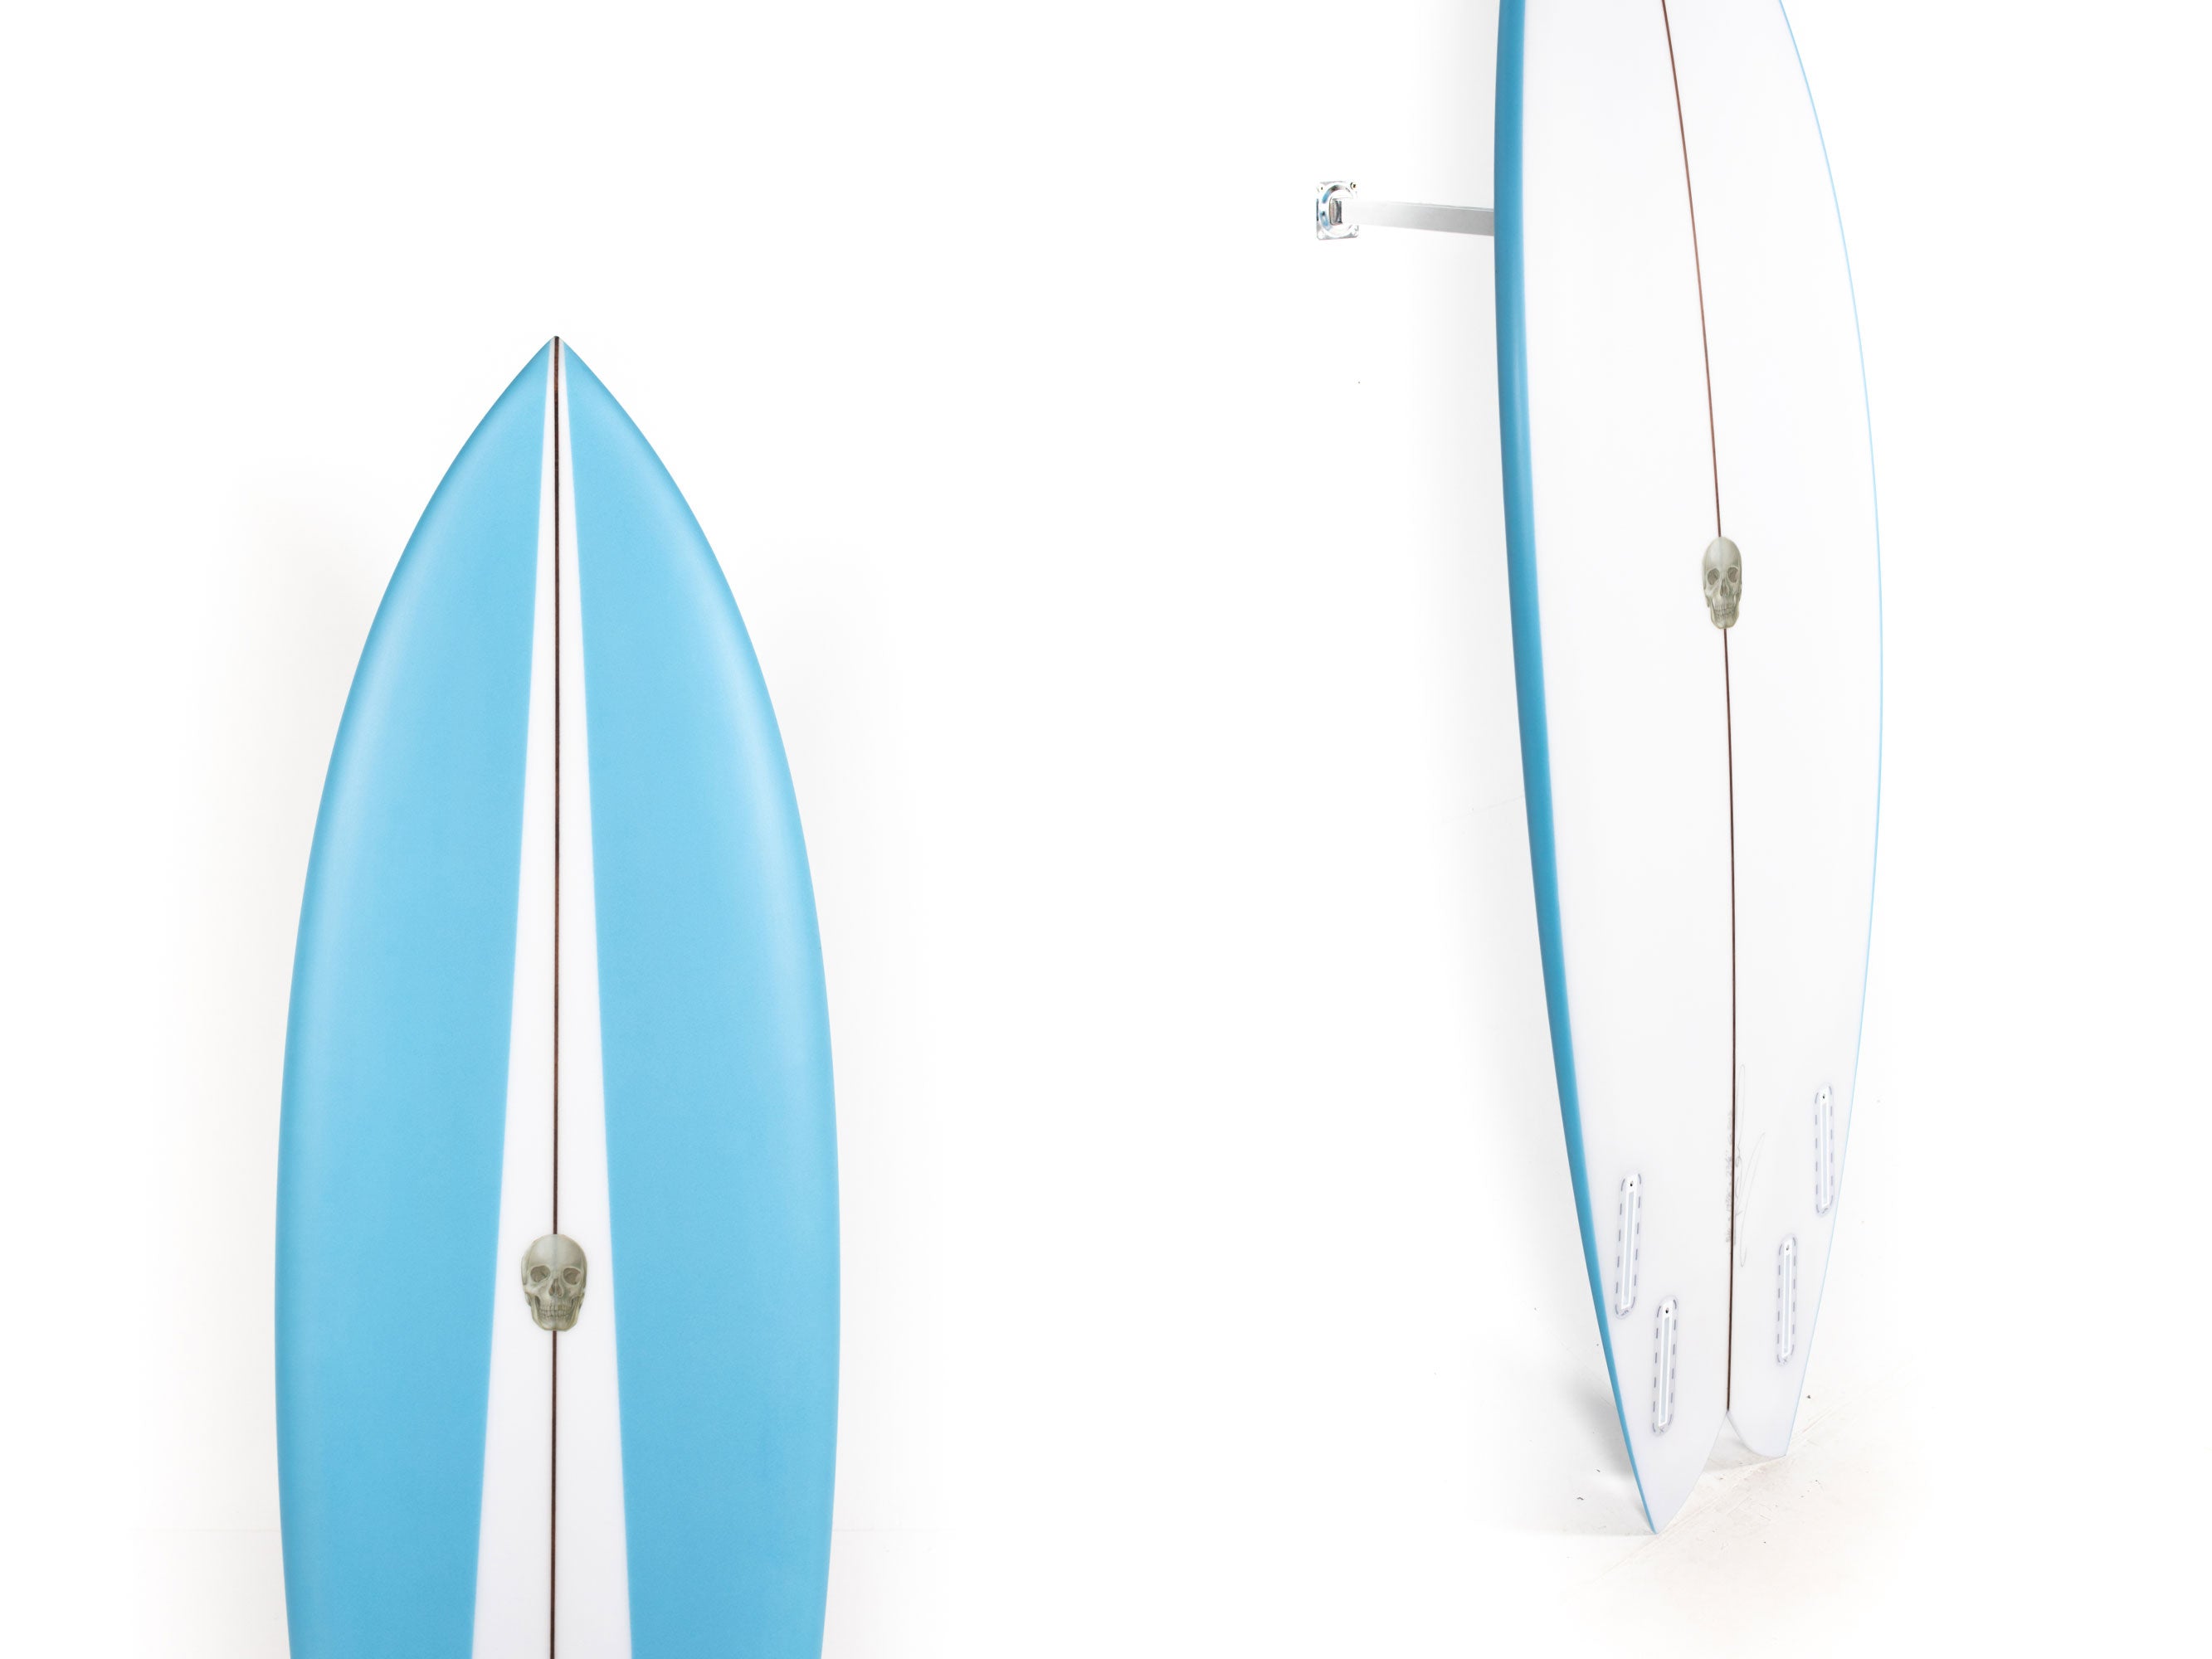 Christenson Surfboards - NAUTILUS - 5'10" x 19 7/8 x 2 3/8 - CX05013